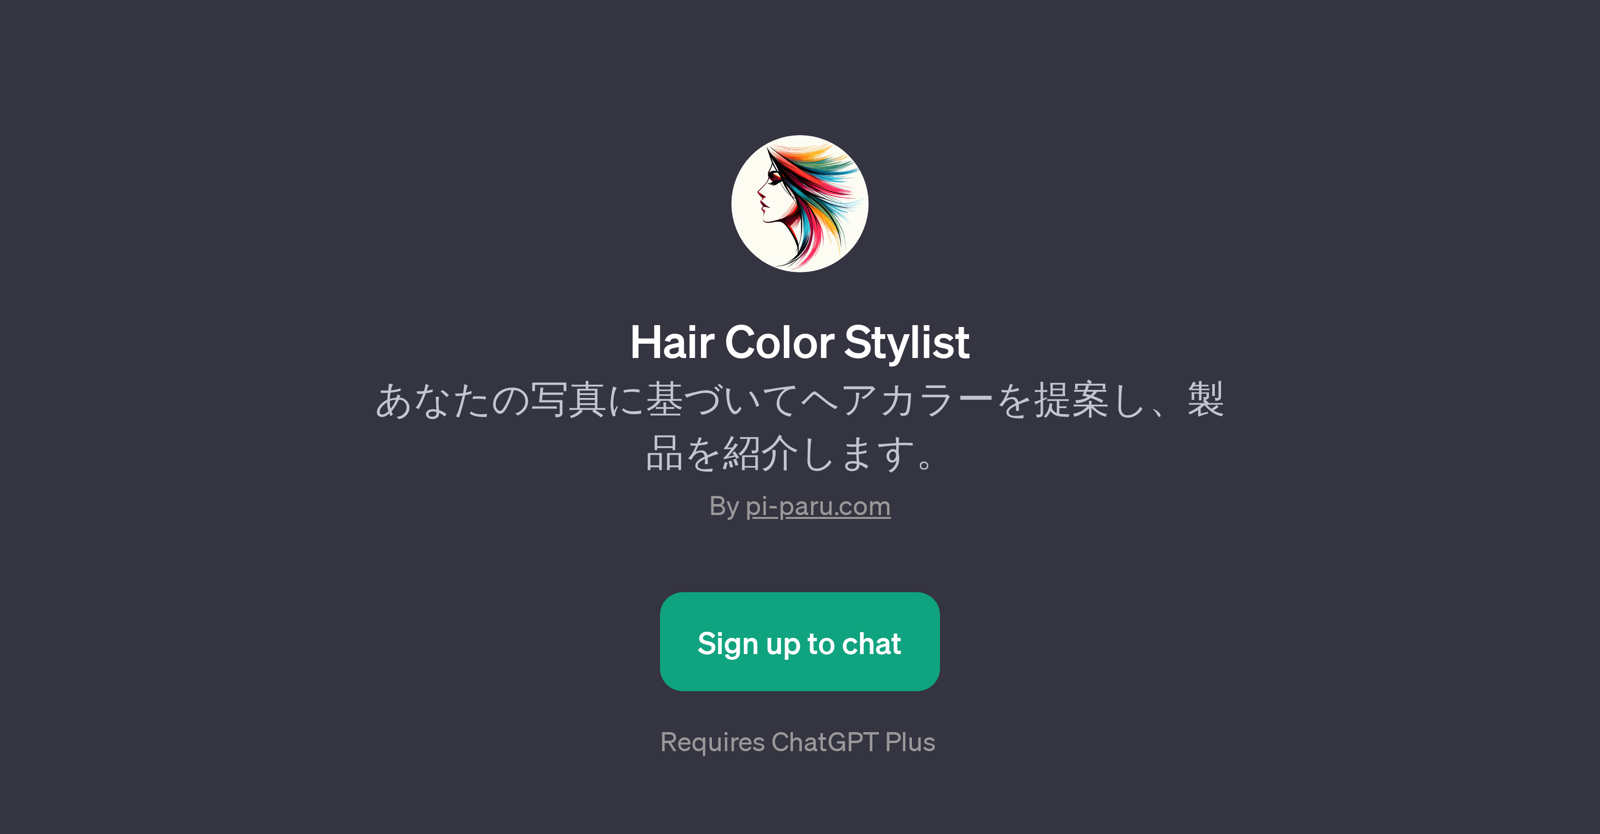 Hair Color Stylist website